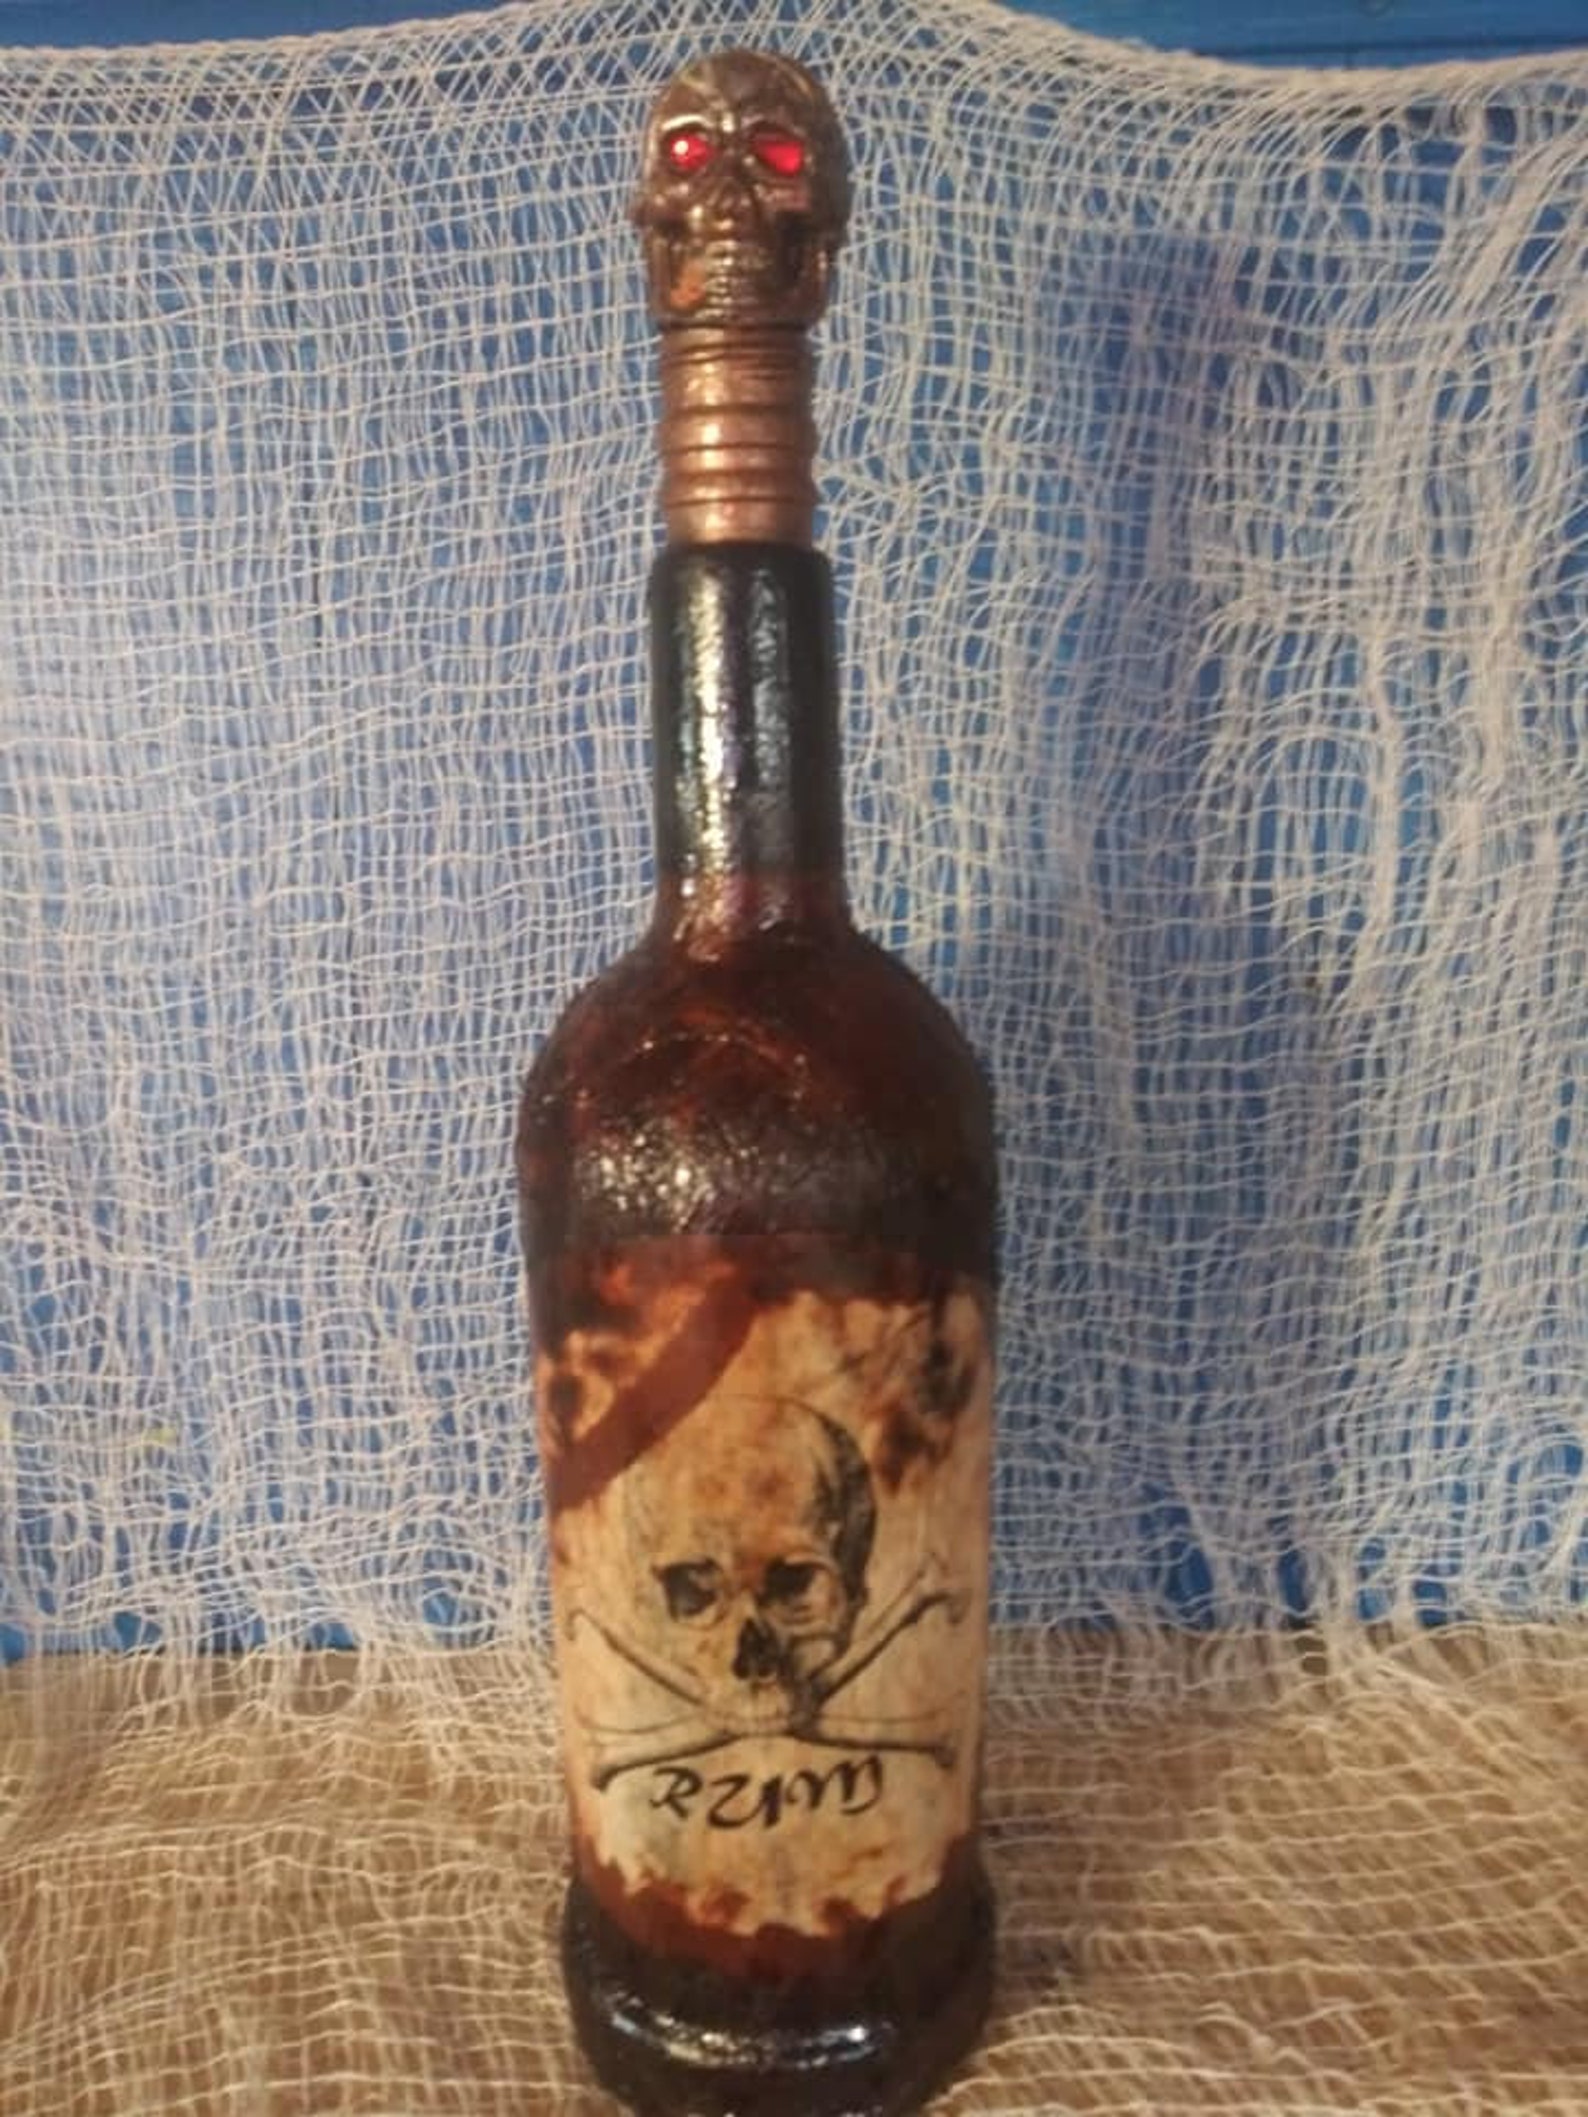 Pirate Rum Halloween Prop Potion Bottle Mad Scientist | Etsy